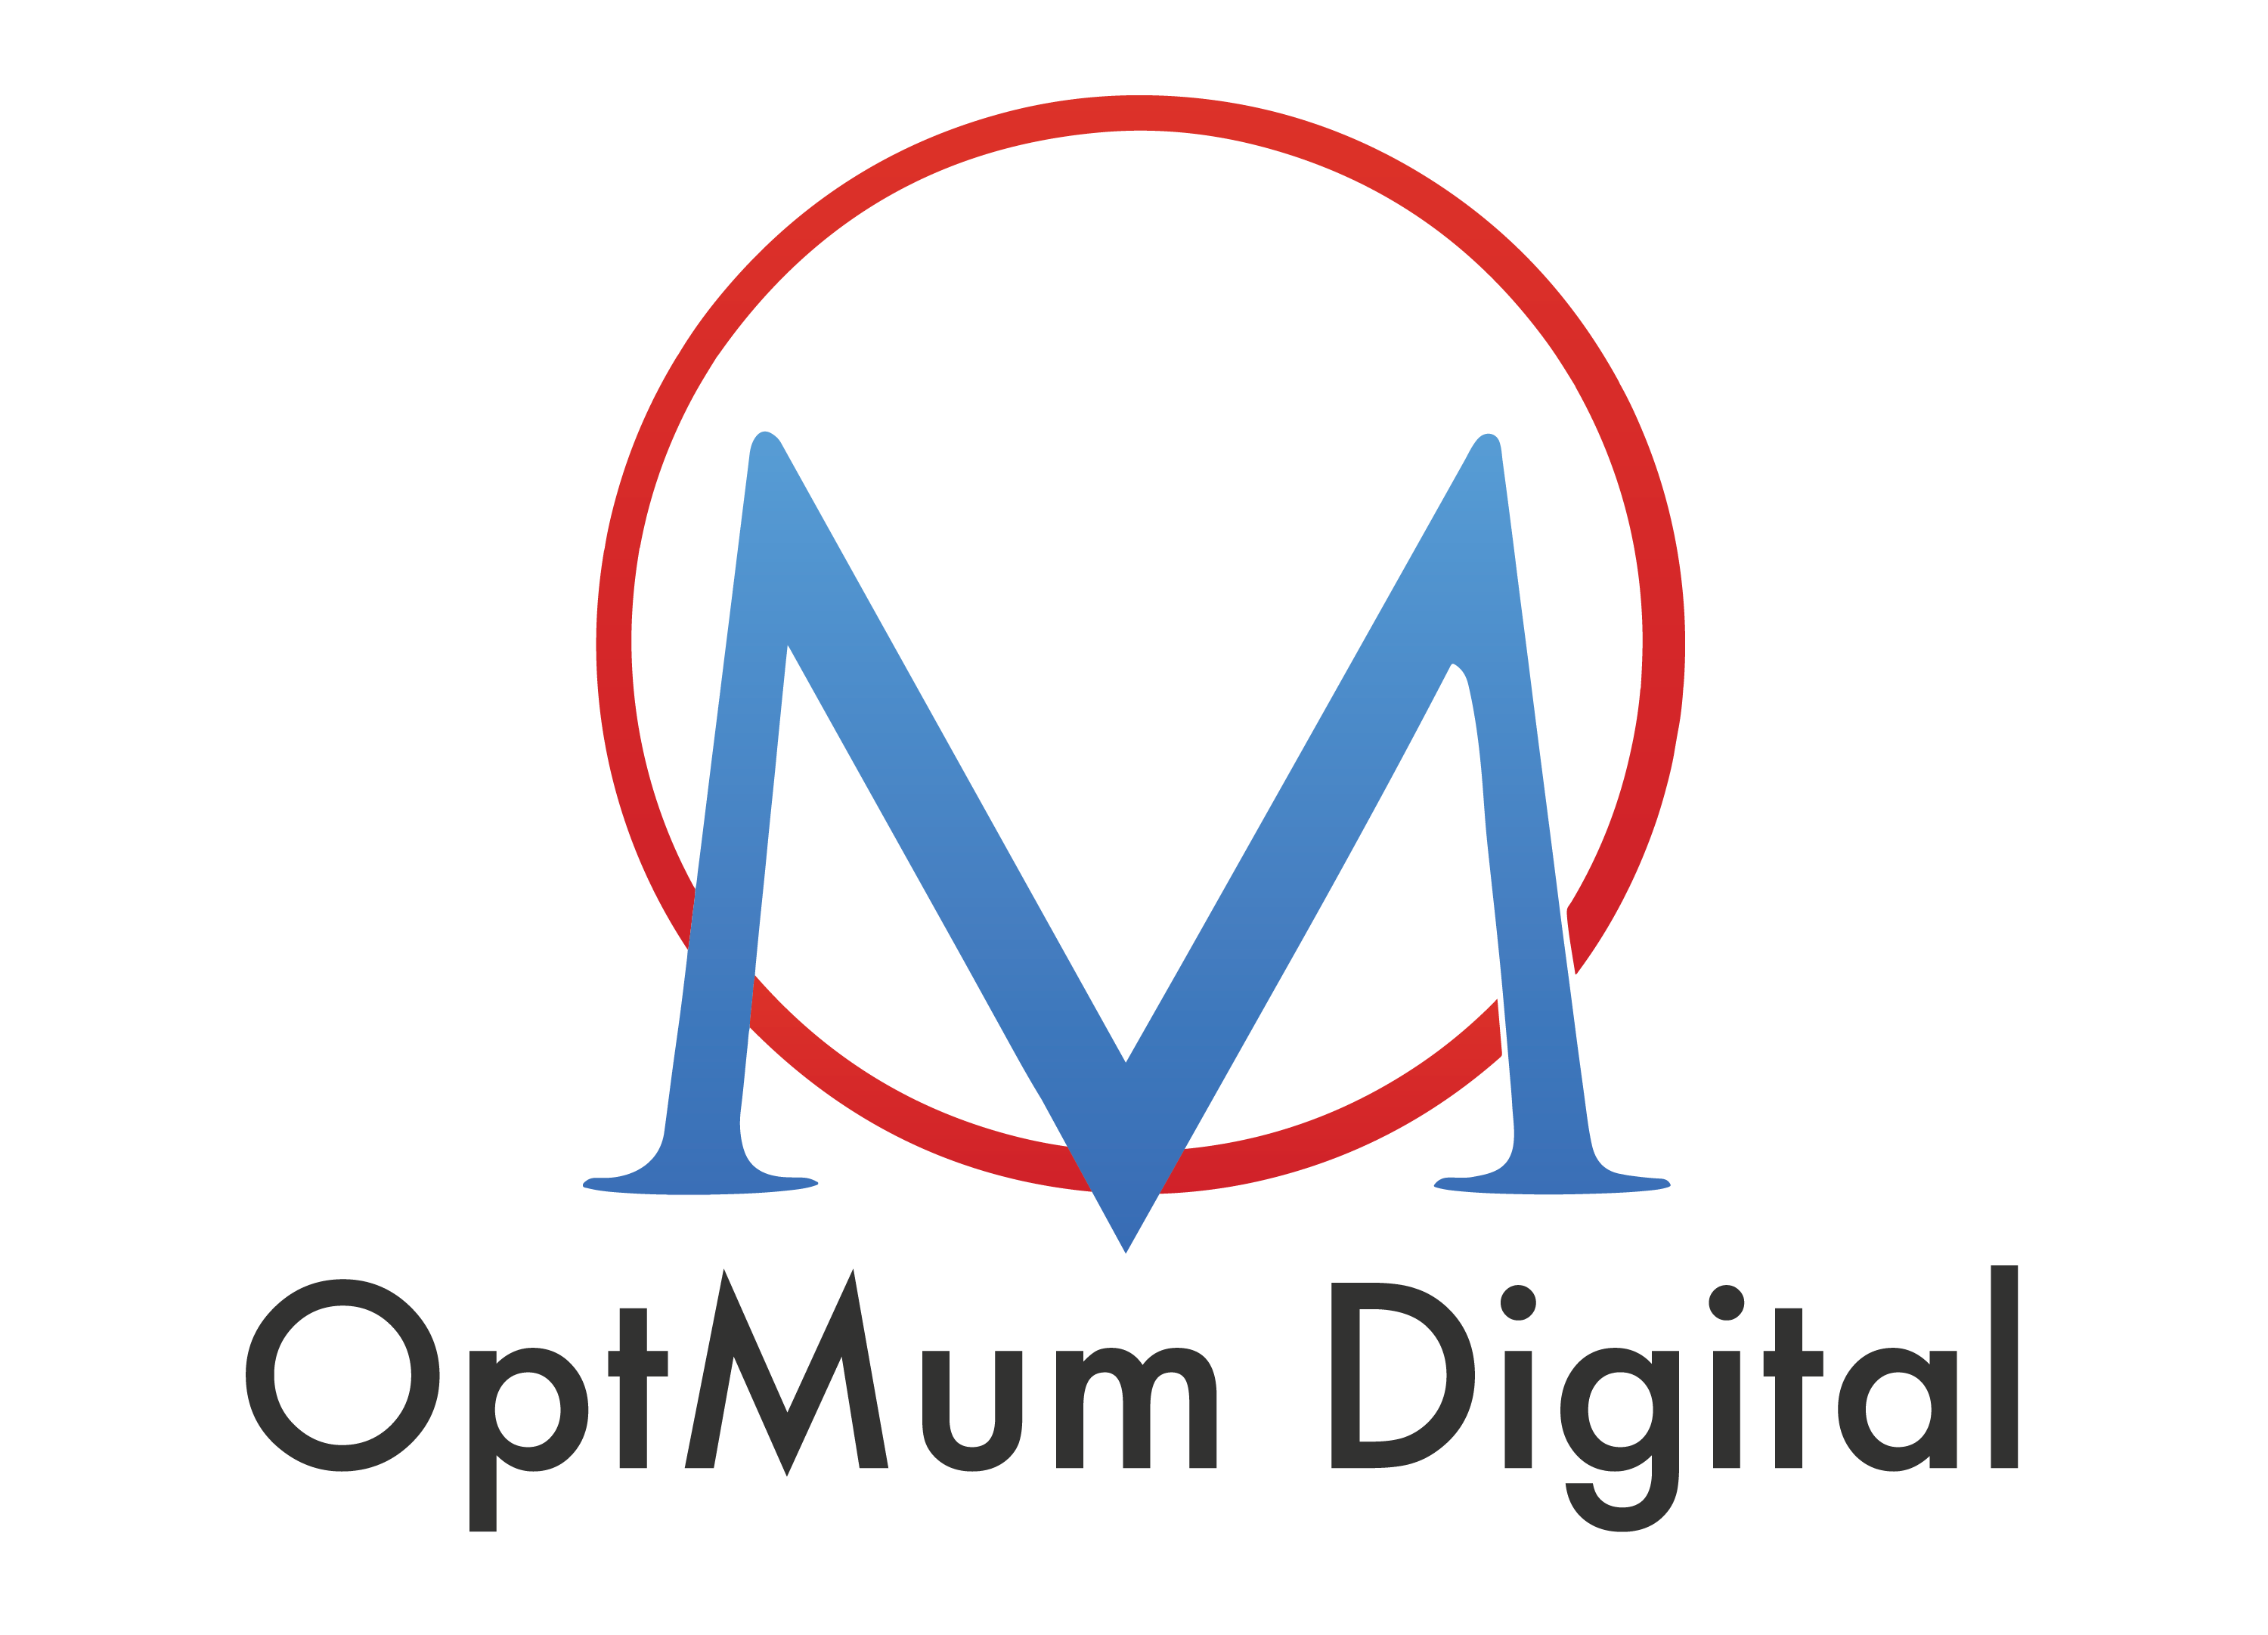 (c) Optmumdigital.com